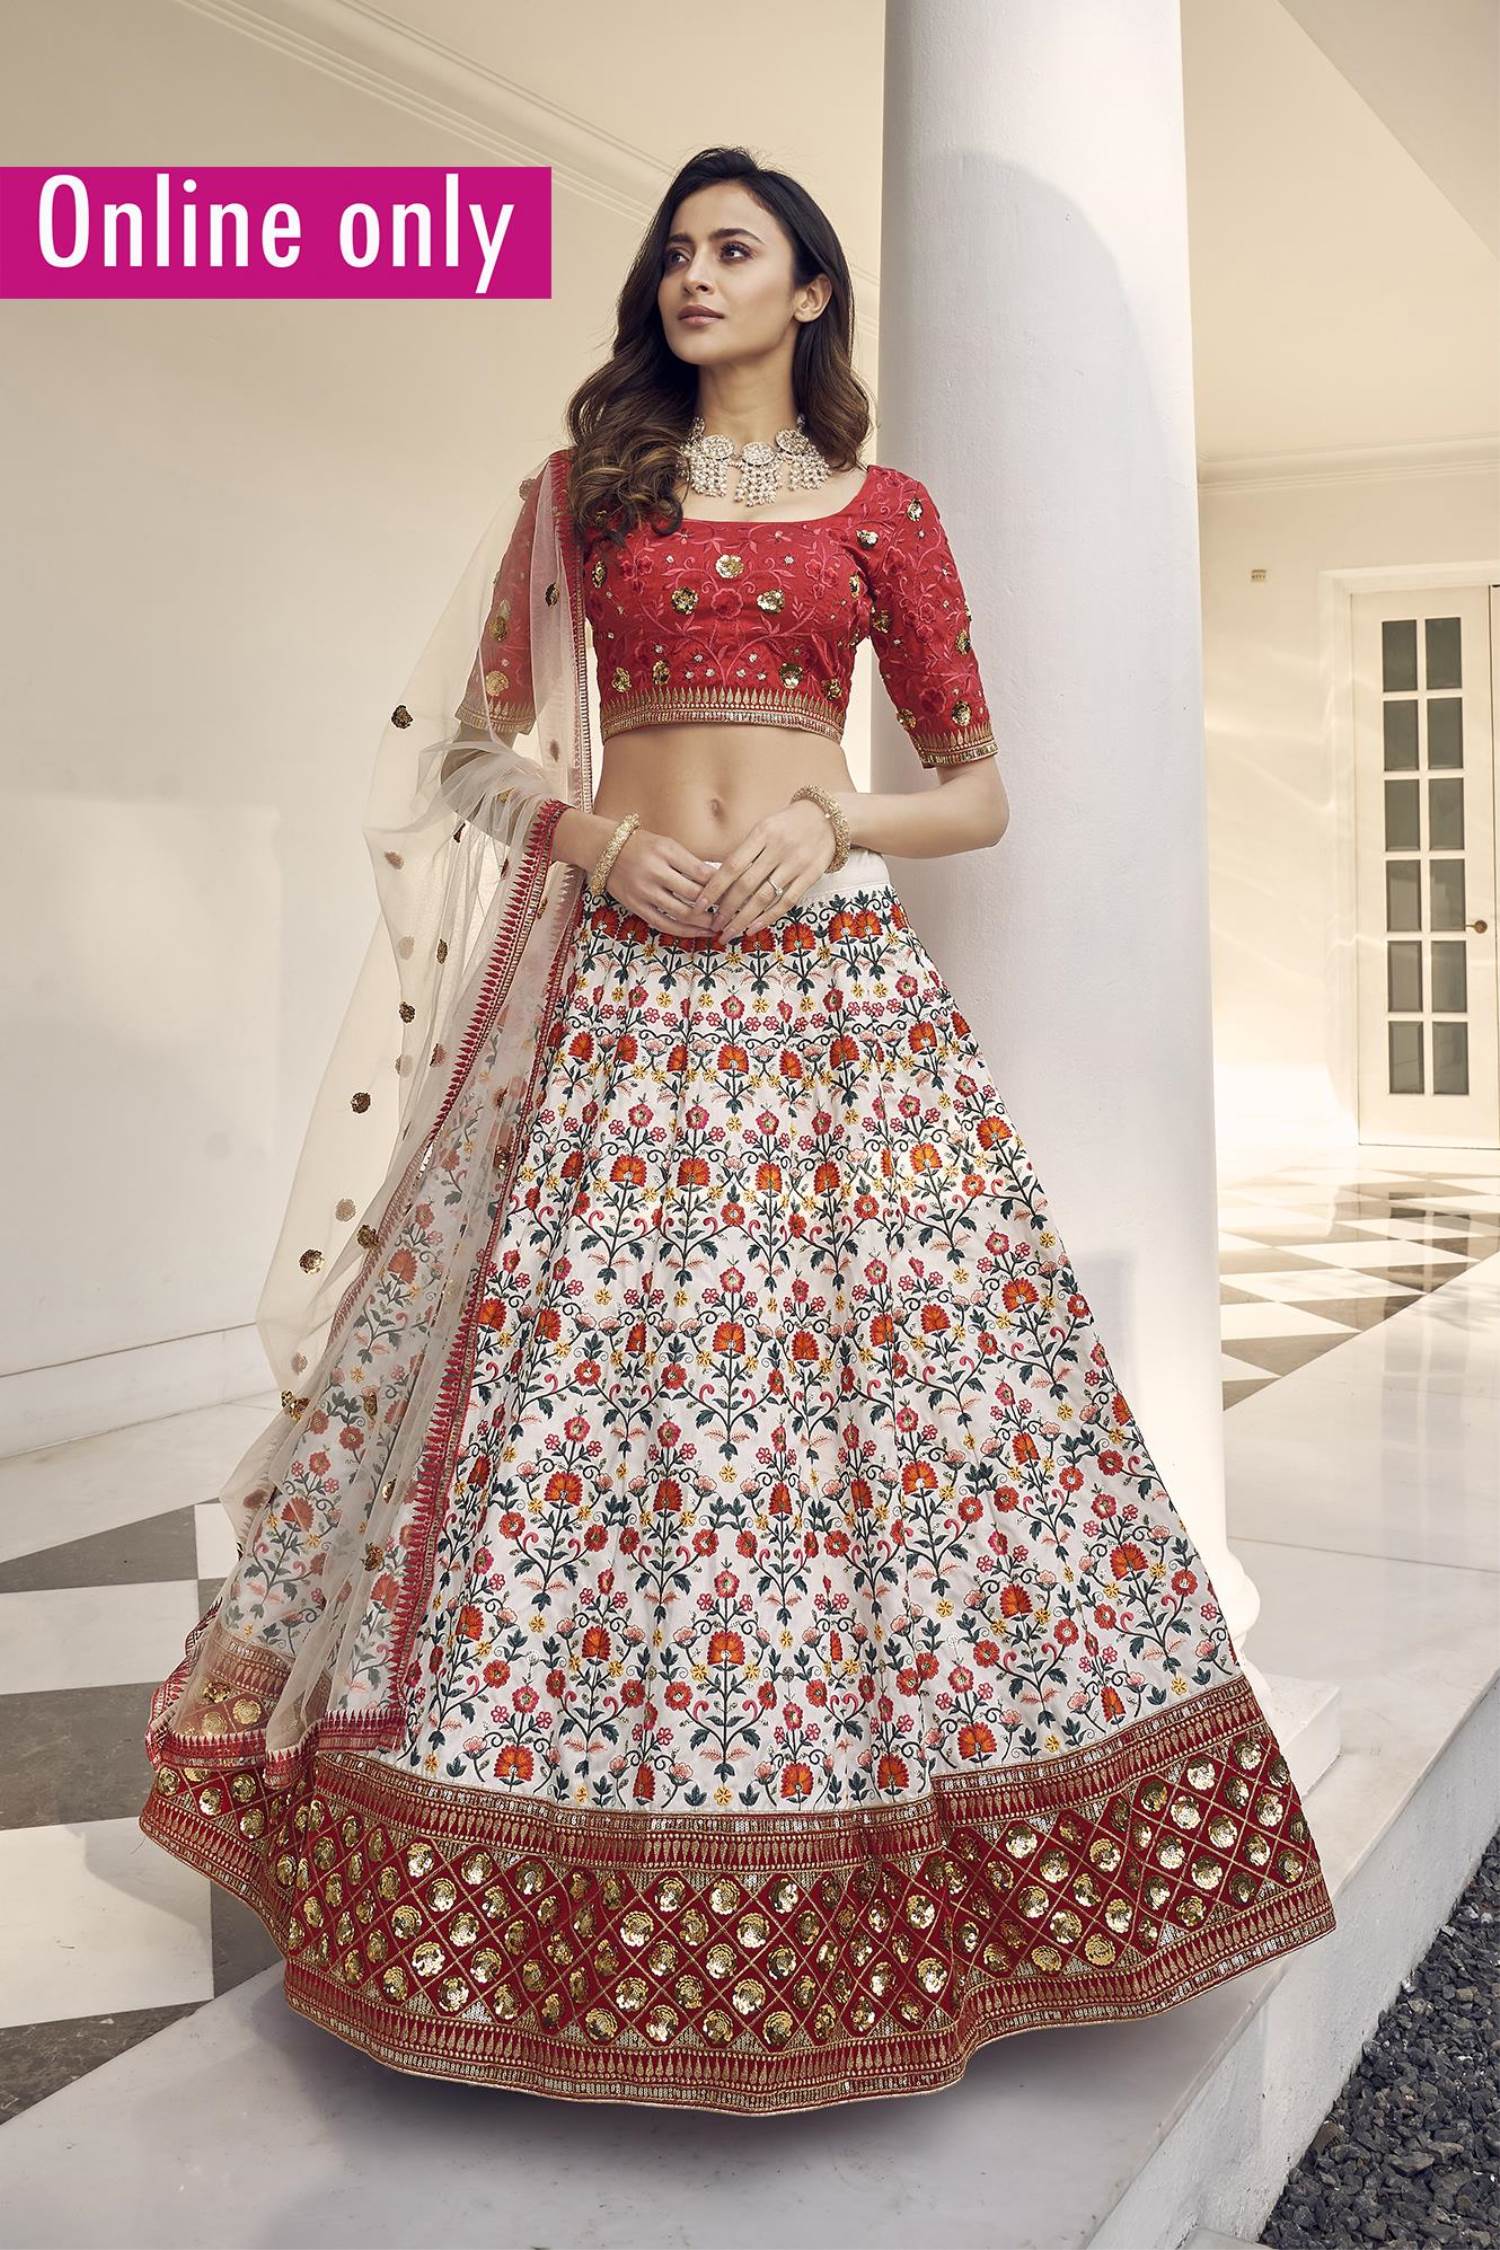 Wedding Dress for Couple Online|lovelyweddingmall.com|India